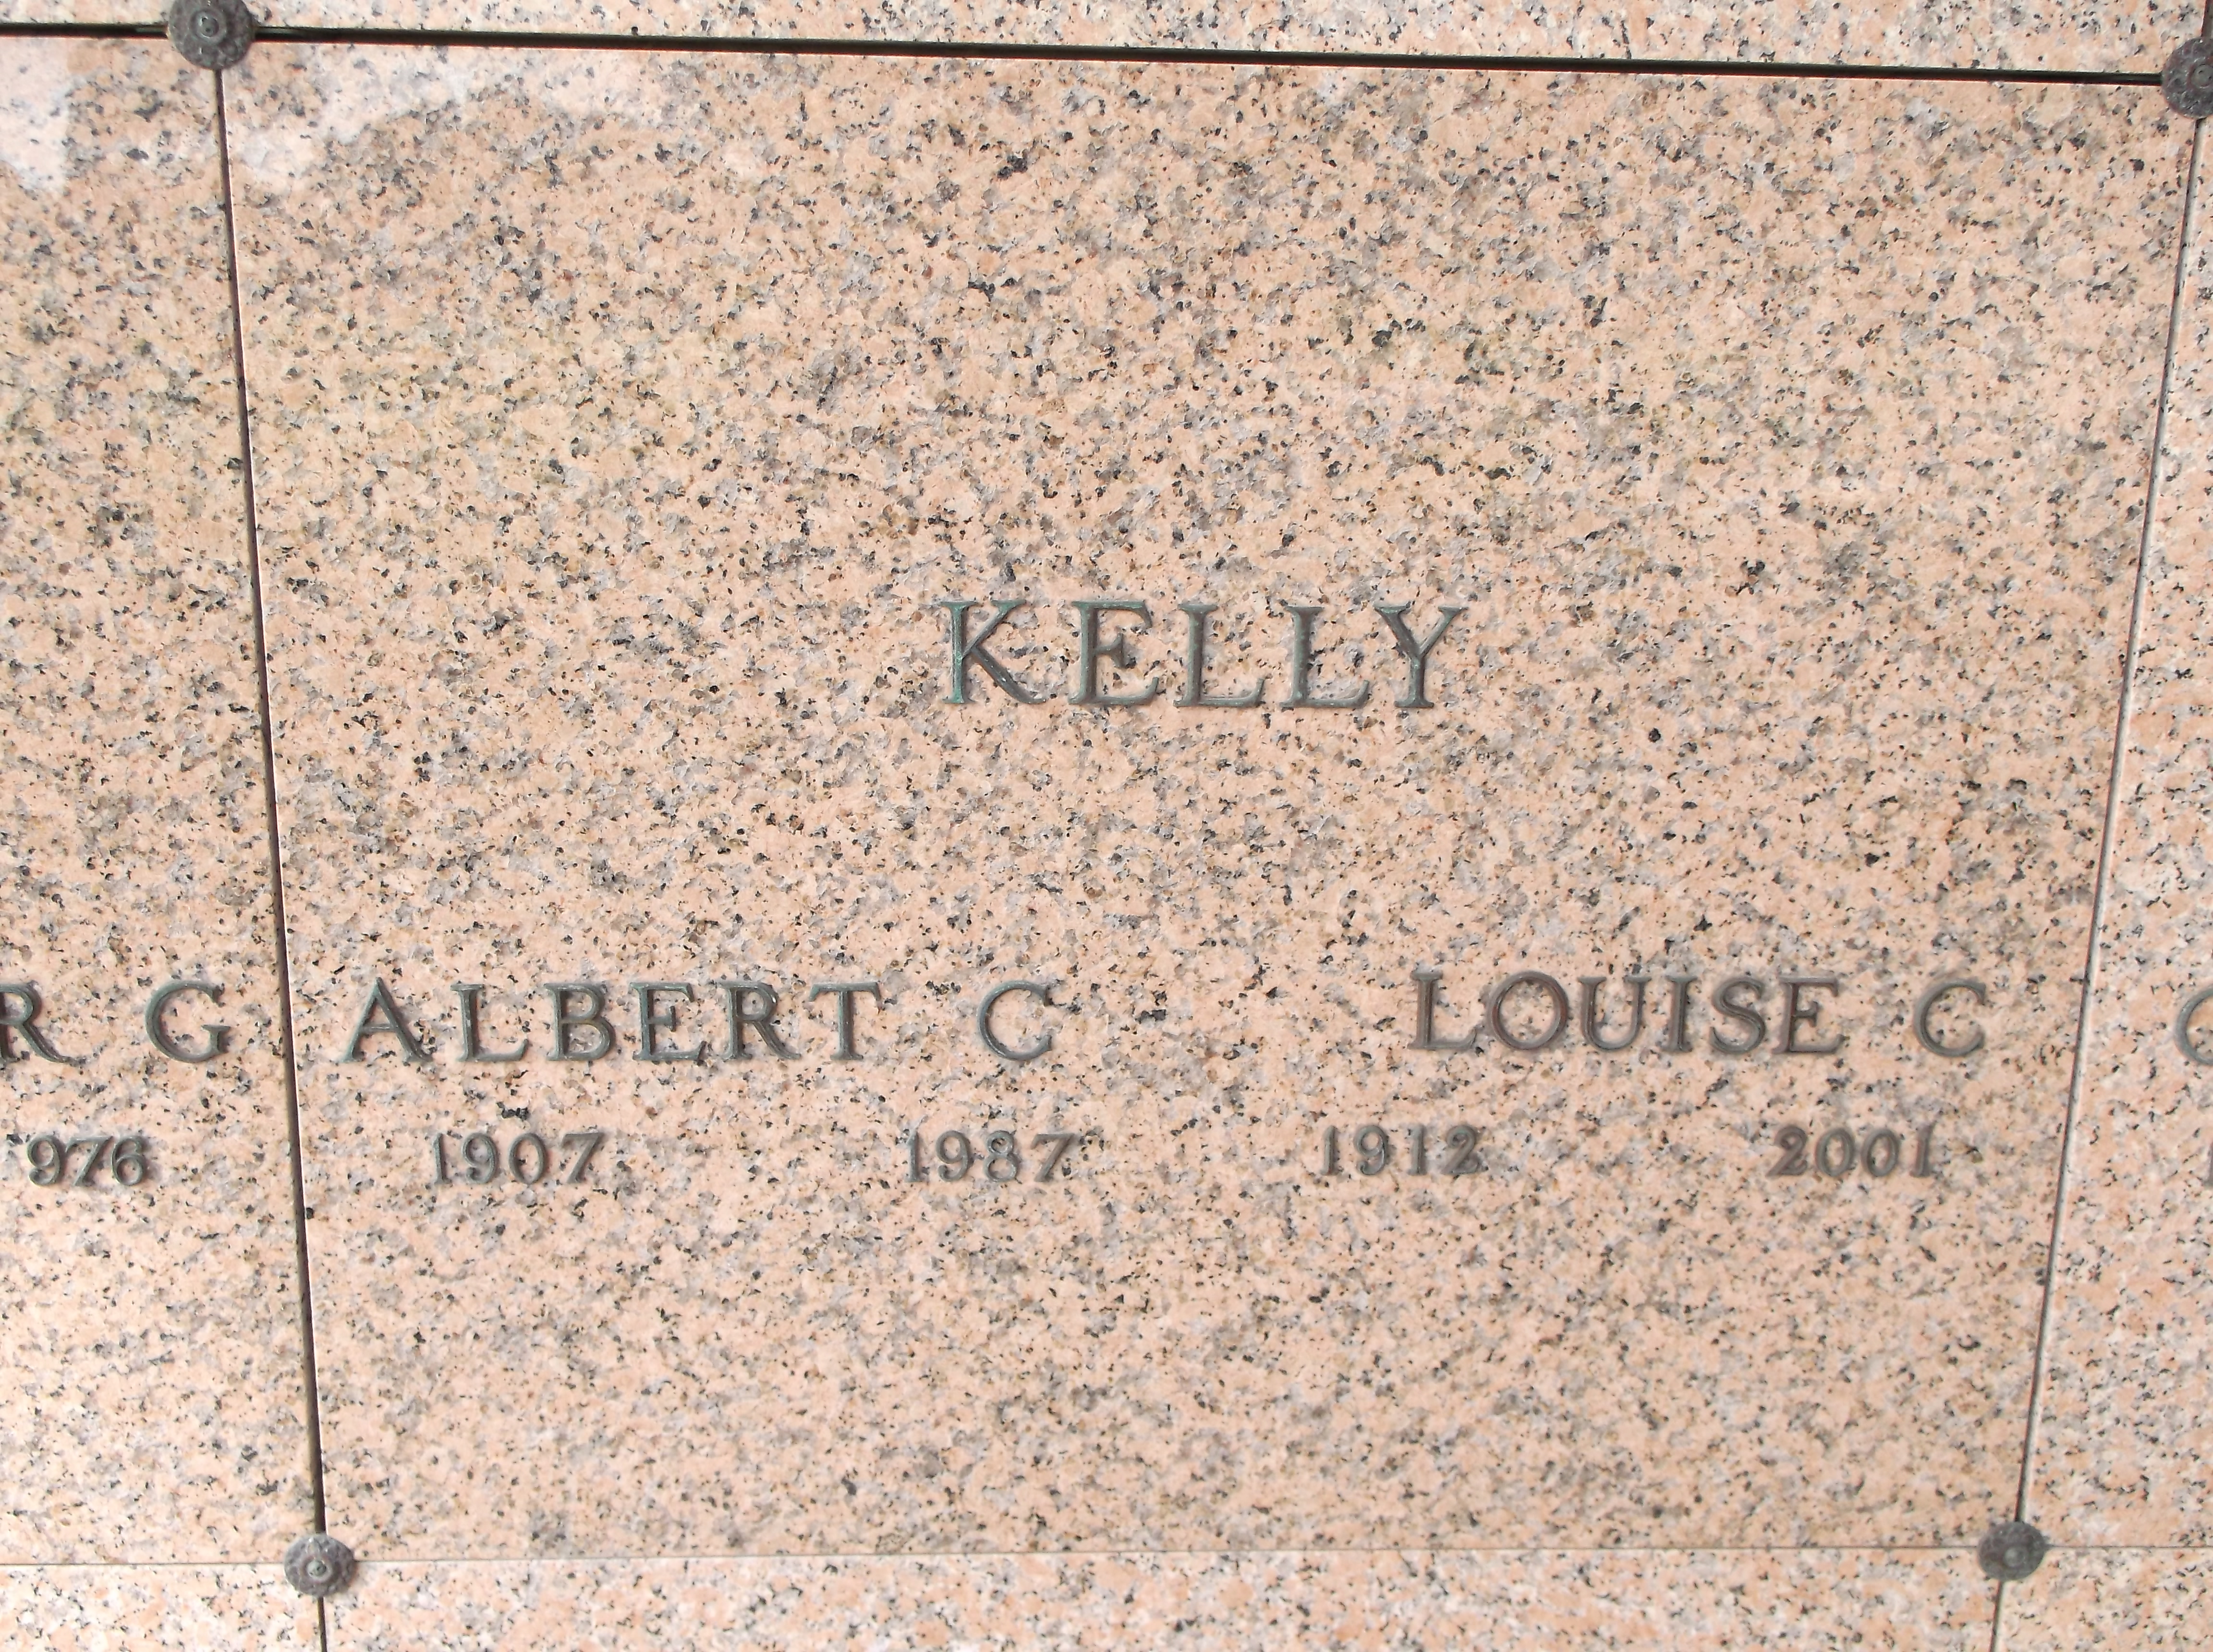 Albert C Kelly